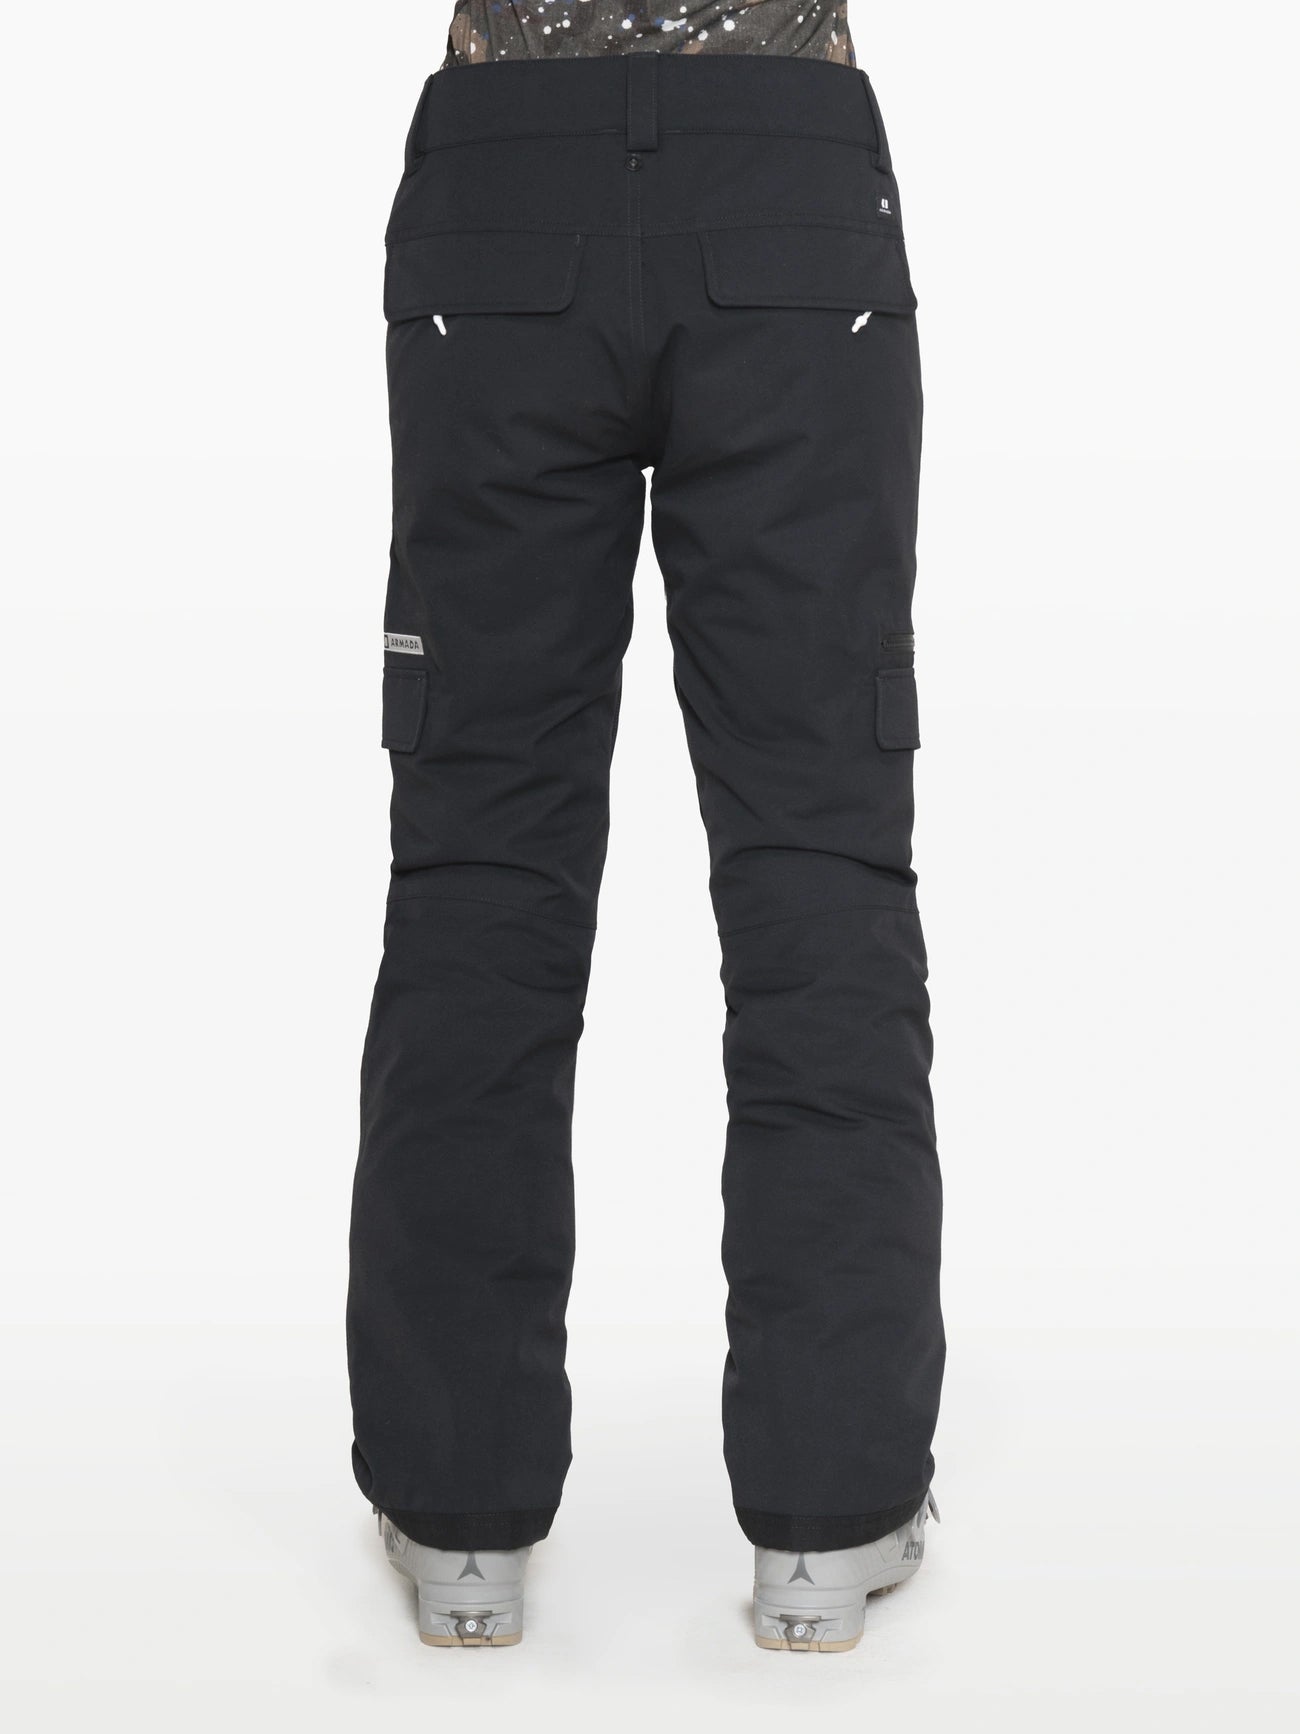 Roxy Rising High Short Technical Snow Pants - True Black – Doug's